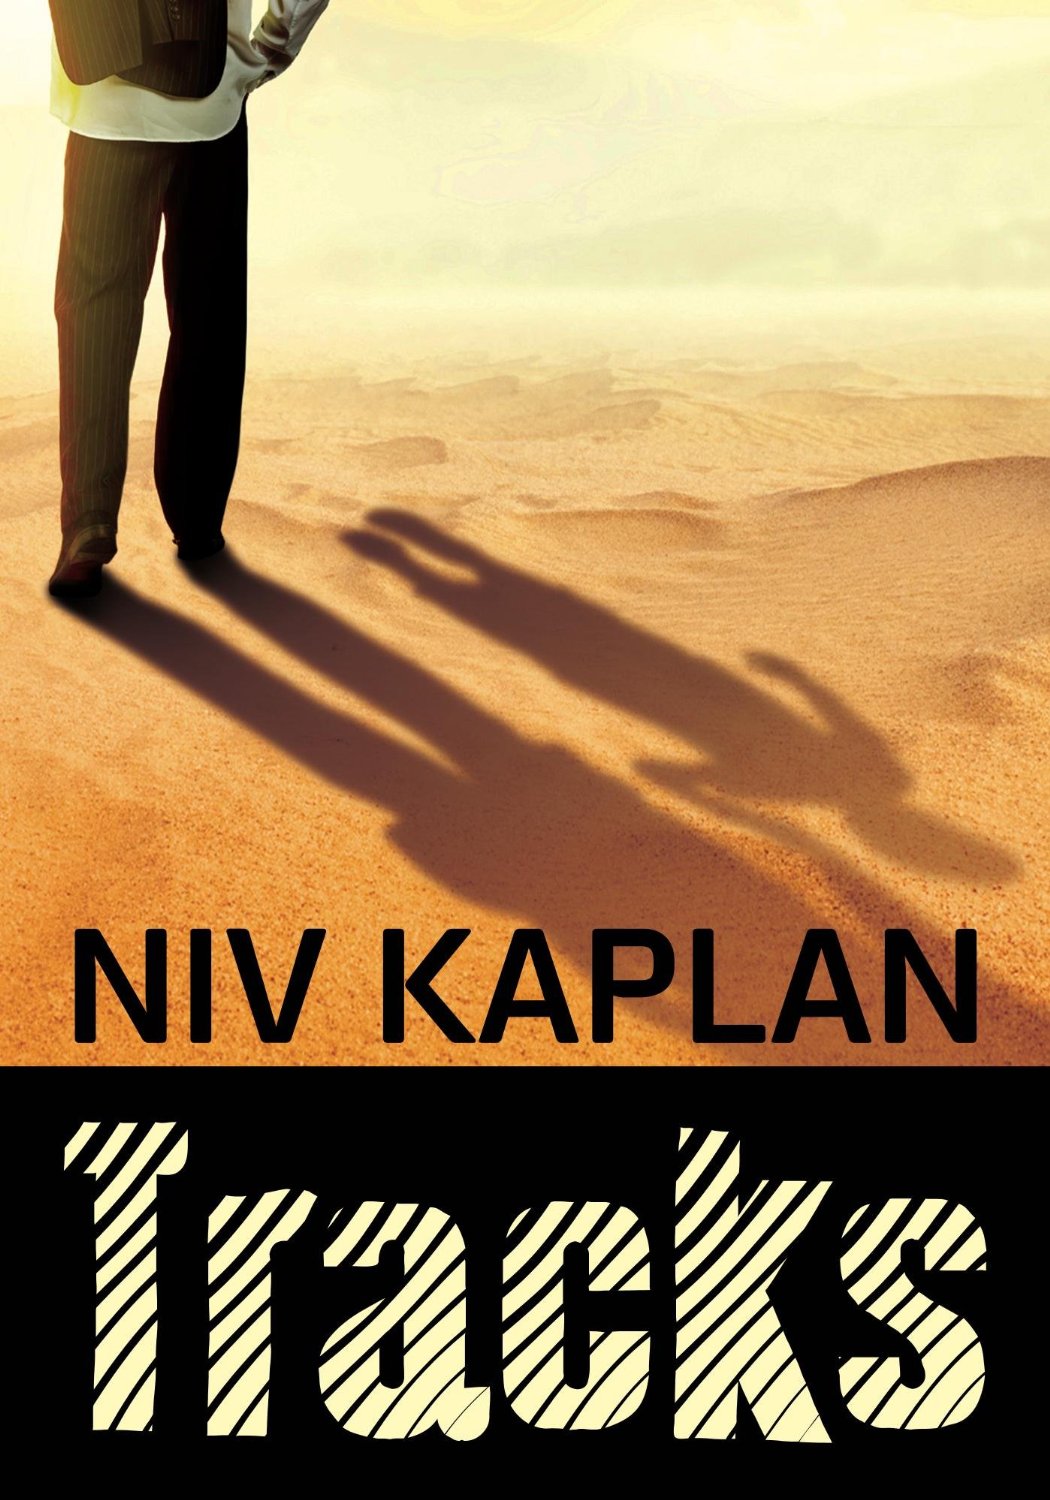 Tracks by Niv Kaplan